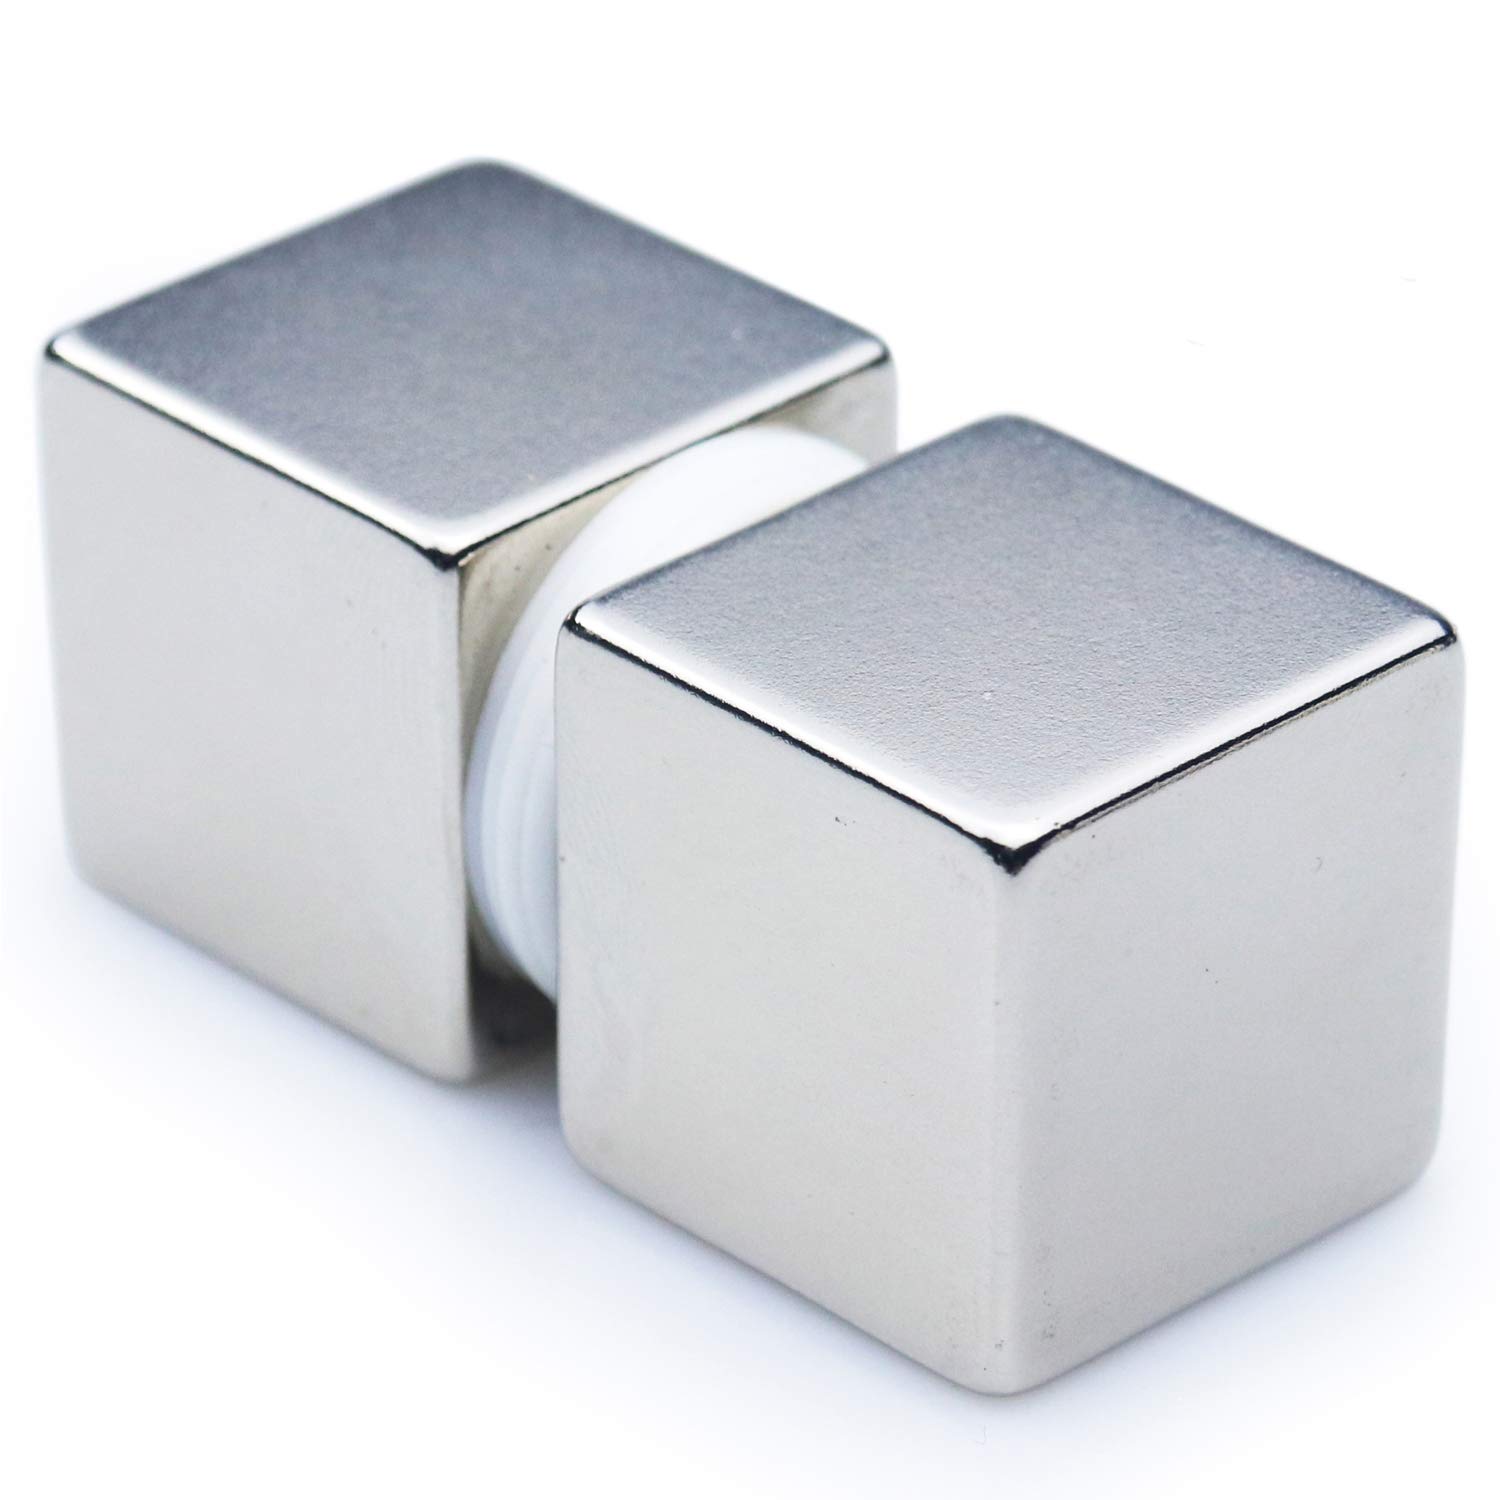 https://www.fullzenmagnets.com/cube-neodymium-magnets-large-magnets-fullzen-technology-product/